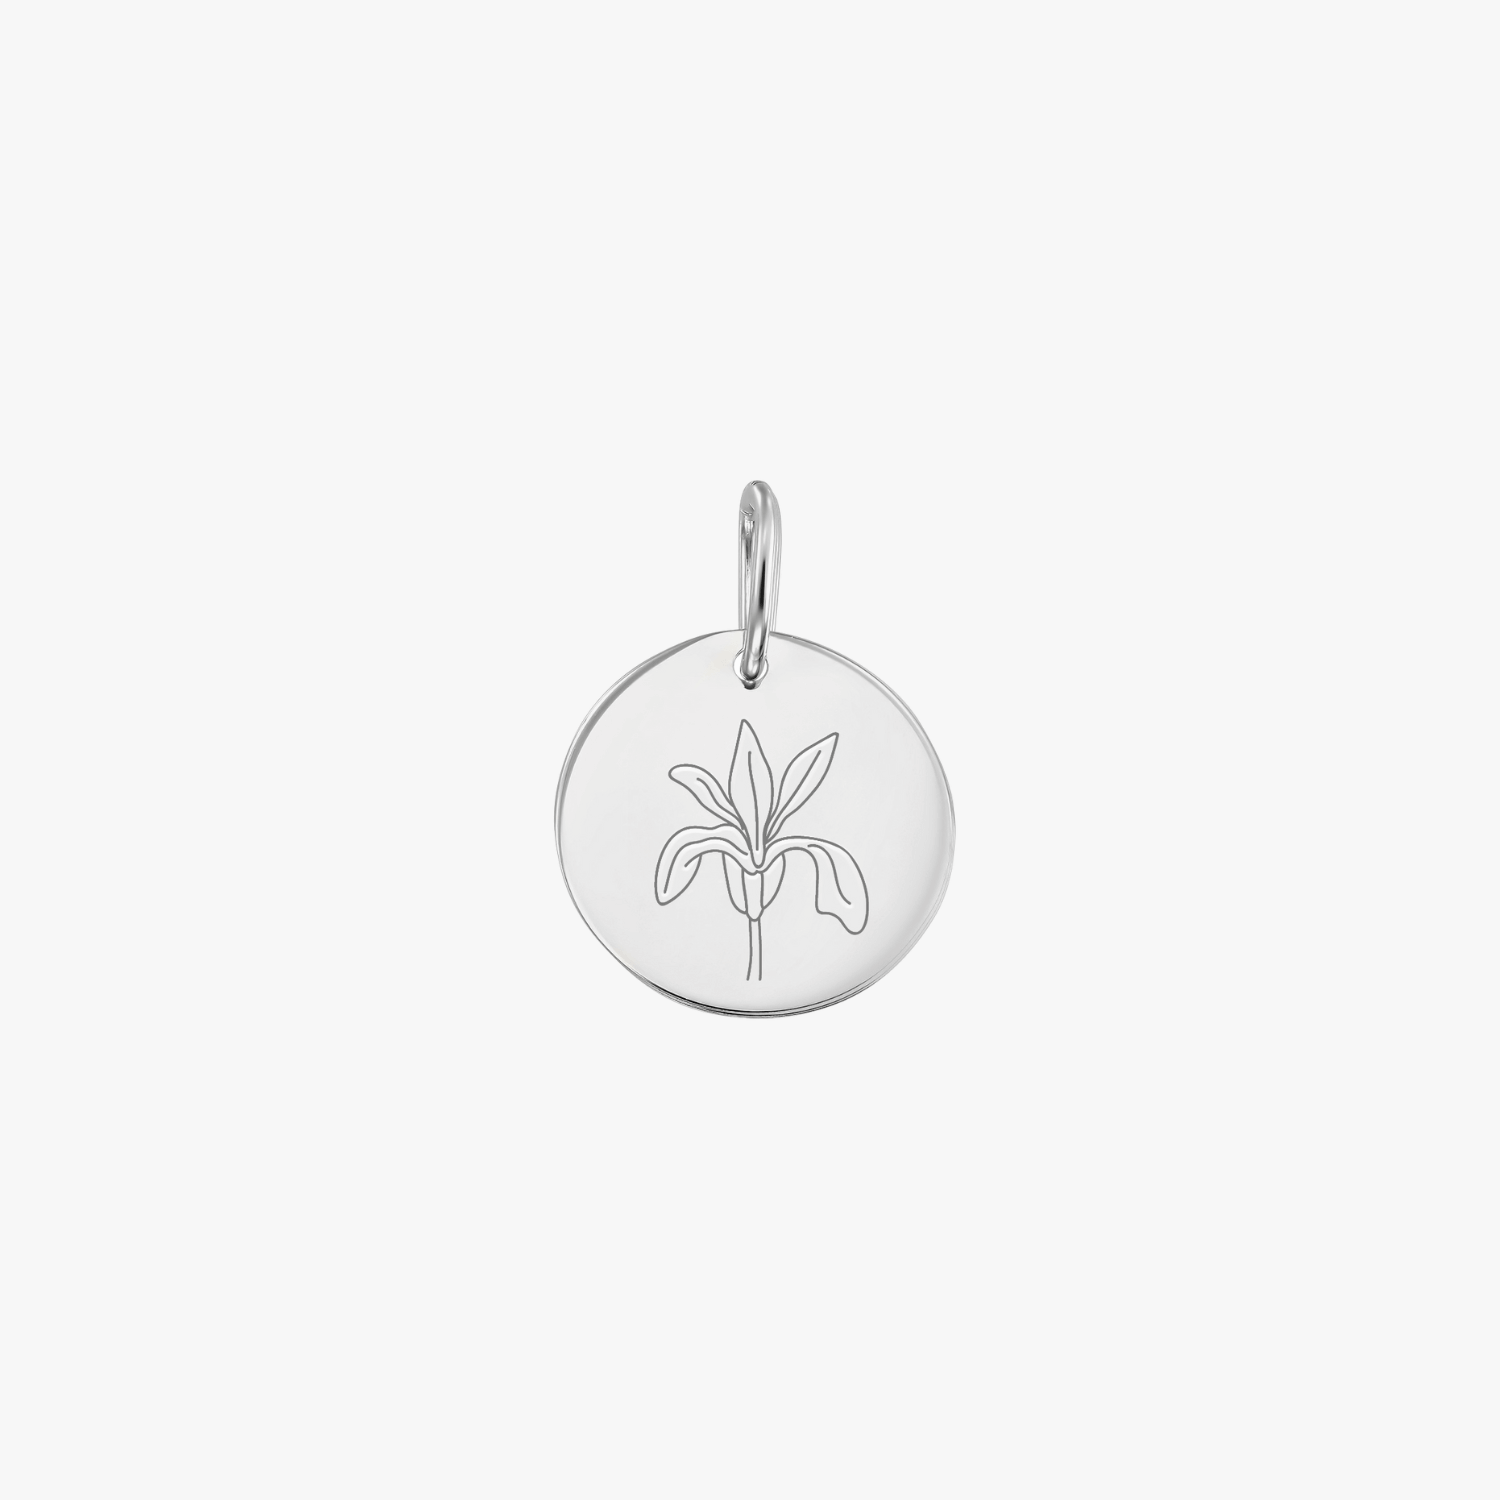 Birth Flower - February Iris white gold pendant